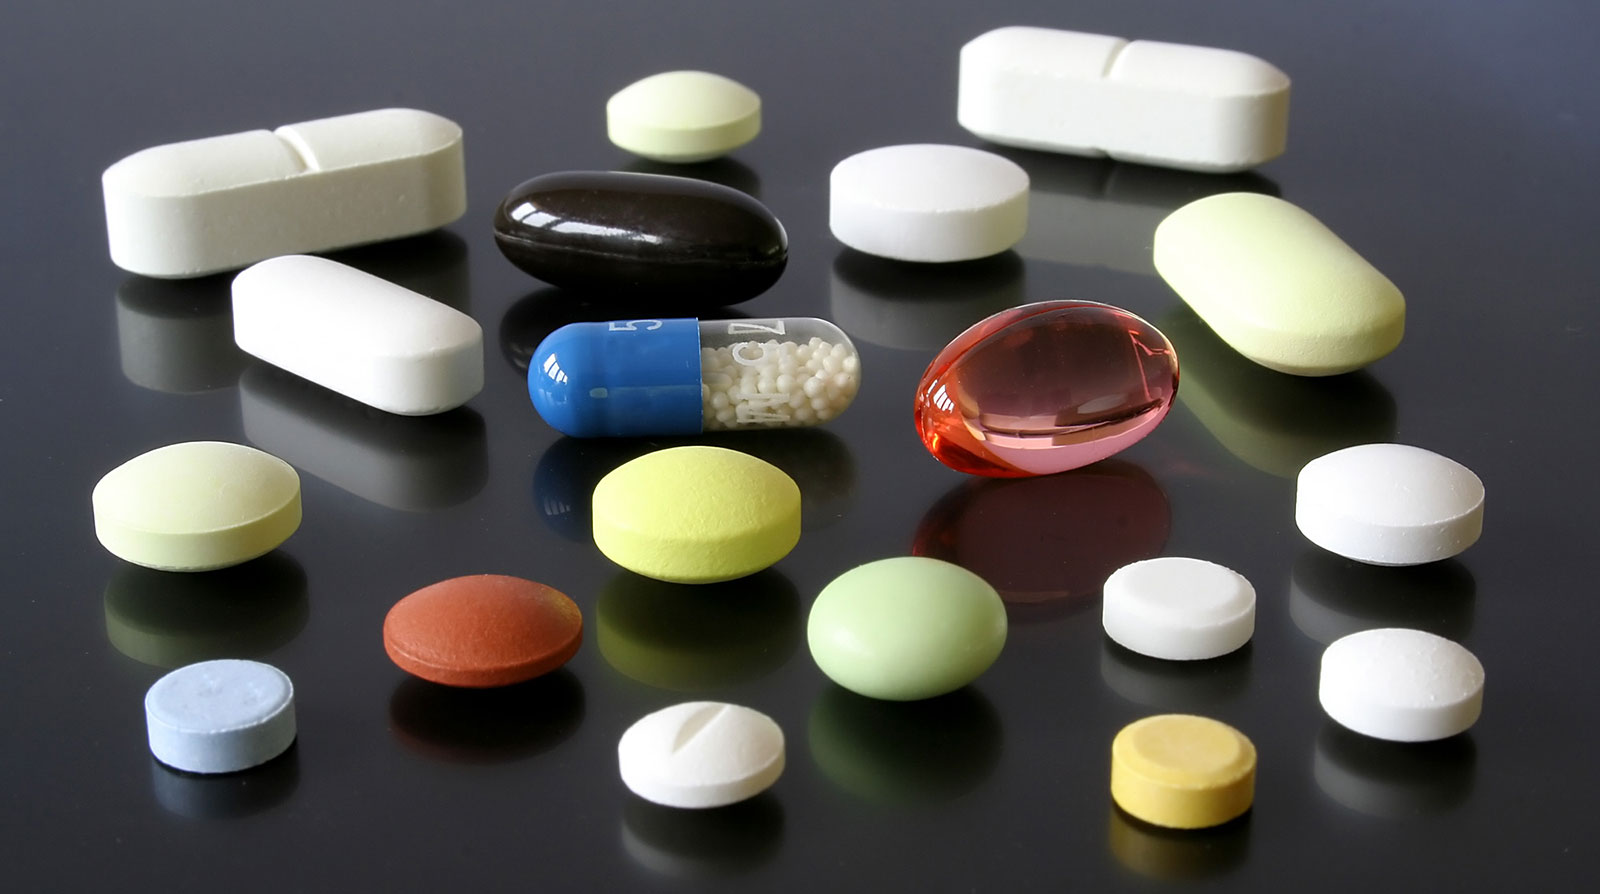 Pharmacology pills